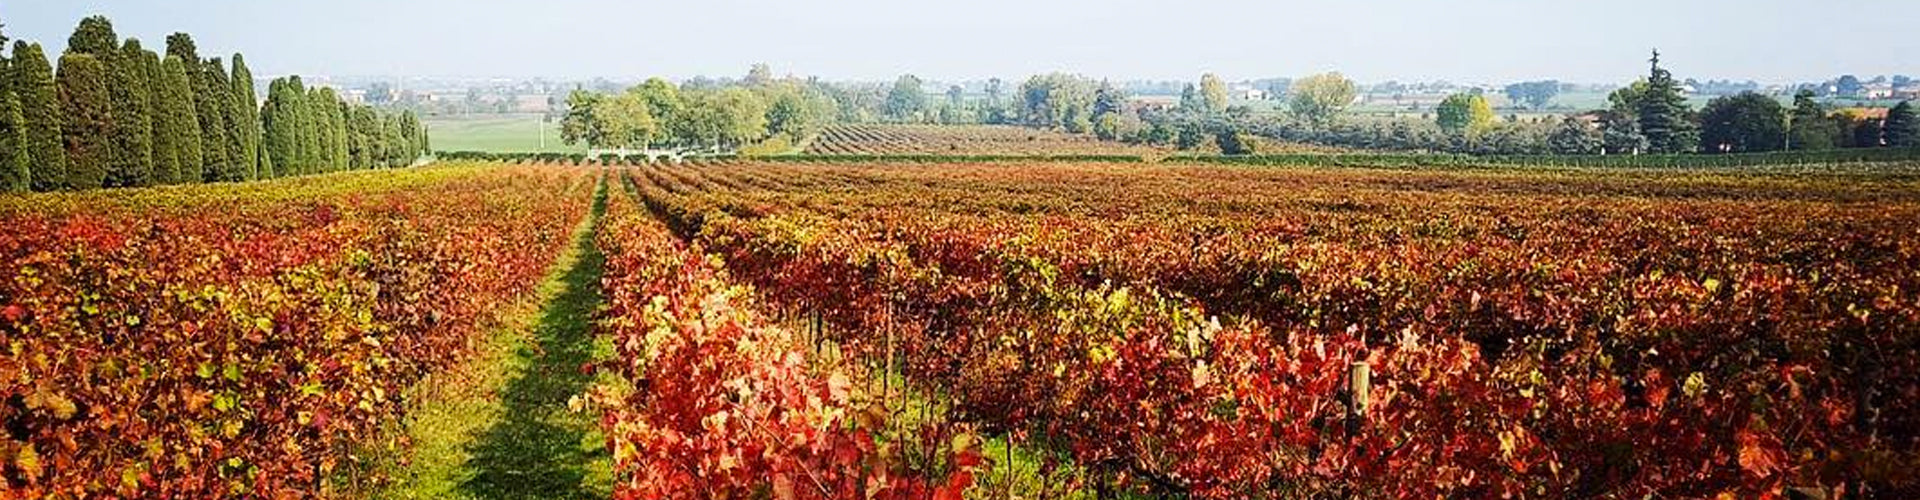 Venturini Baldini Vineyards near Modena in North East Italy